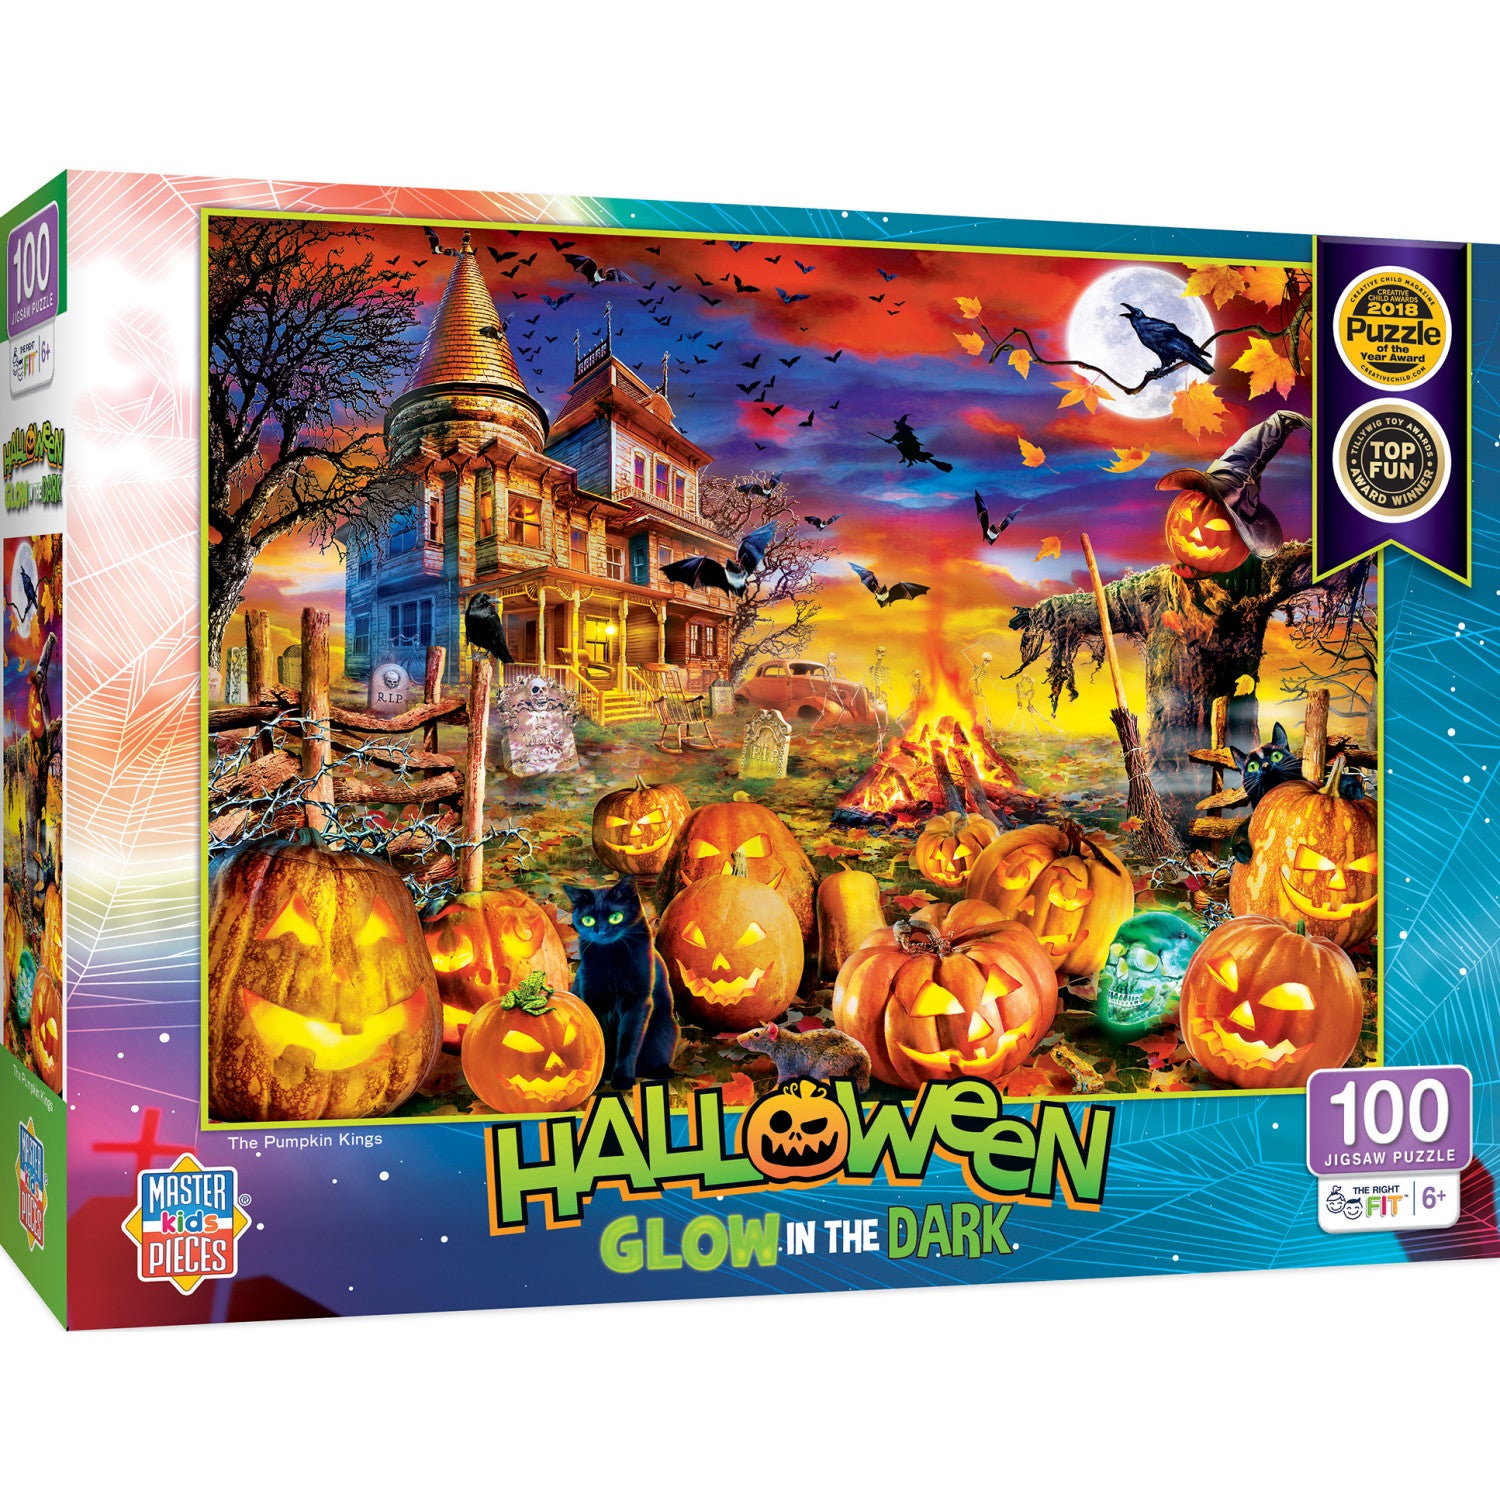 Halloween Glow in the Dark - The Pumpkin King 100 Piece Jigsaw Puzzle